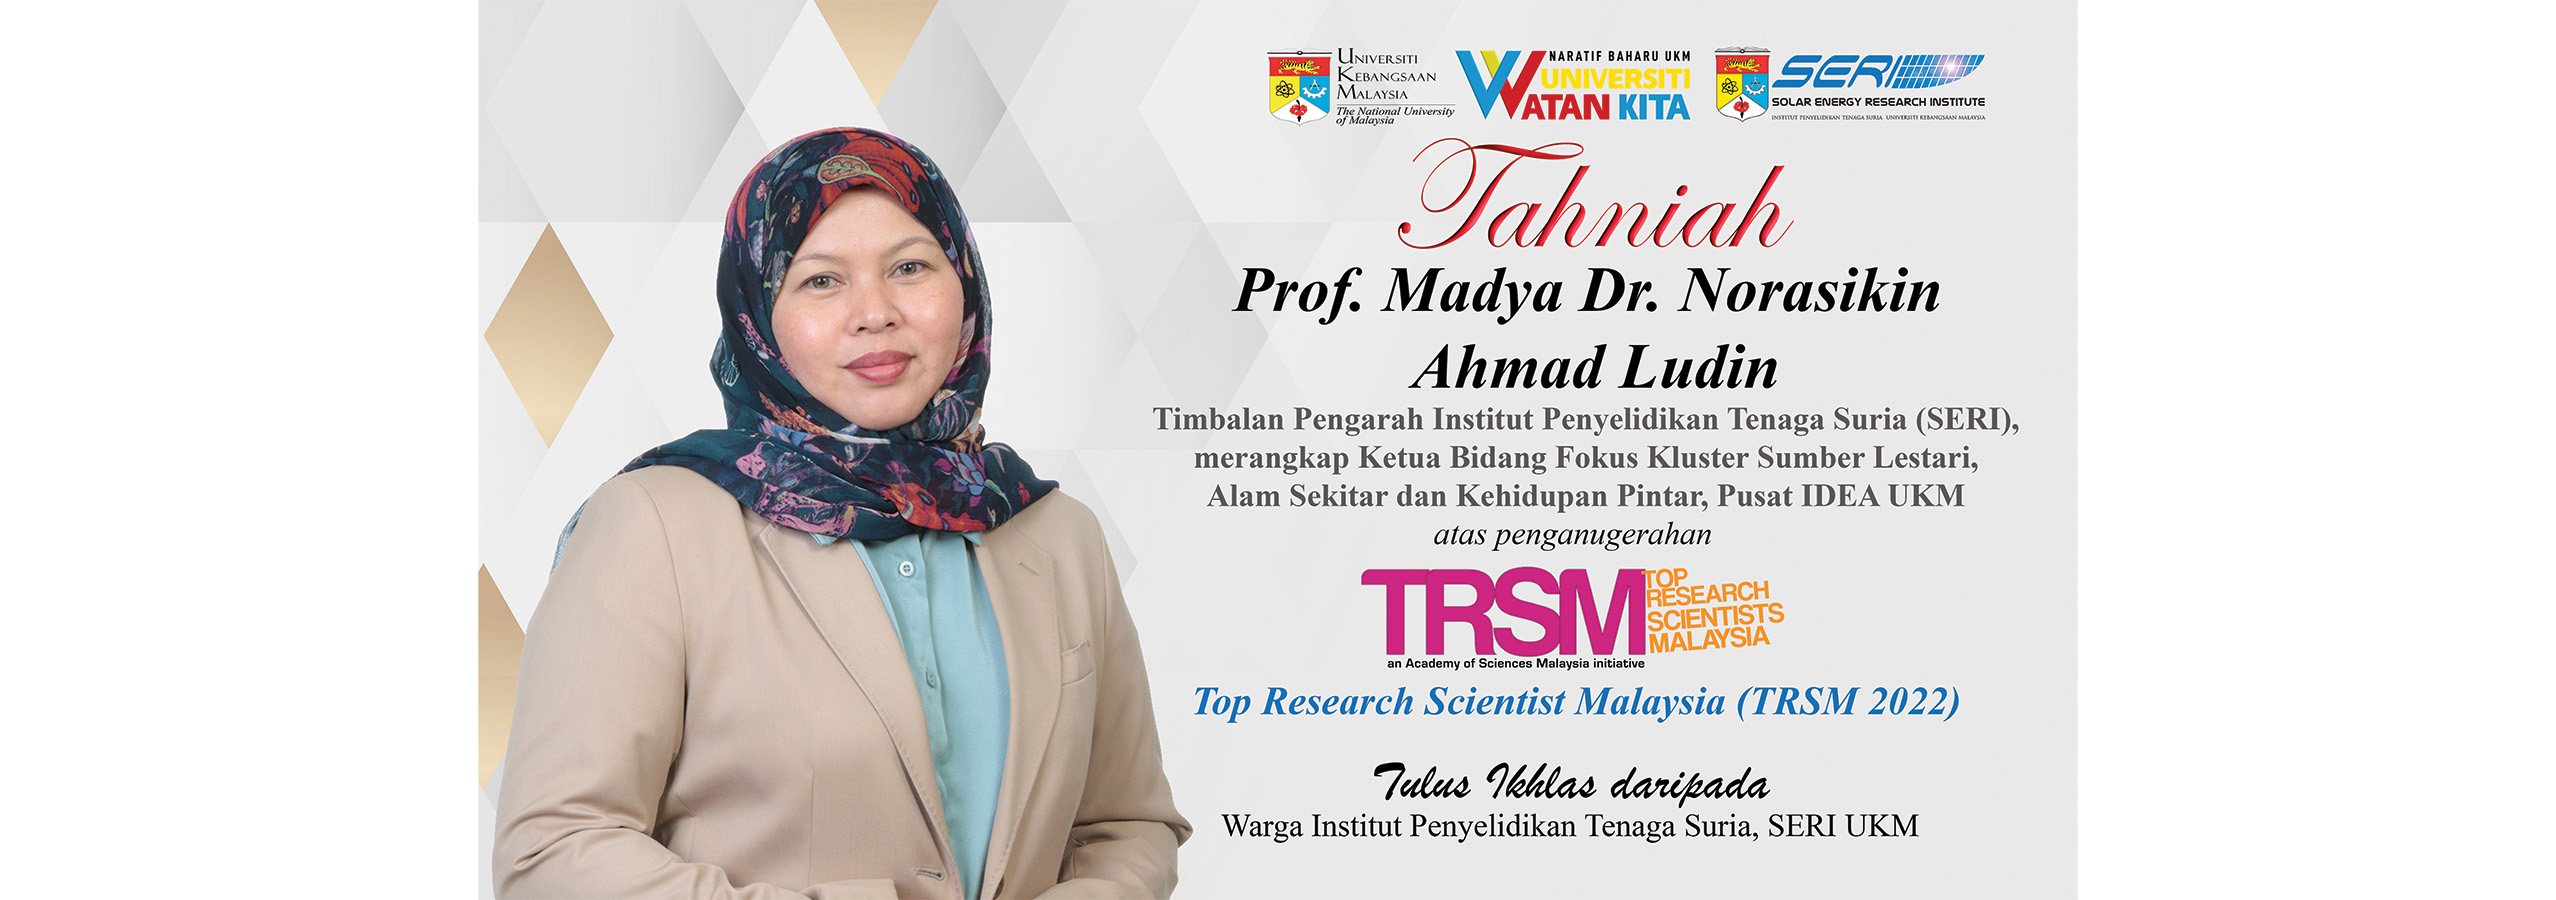 Tahniah! Prof. Madya Dr. Norasikin Ahmad Ludin atas penganugerahan Top Research Scientist Malaysia (TRSM 2022)